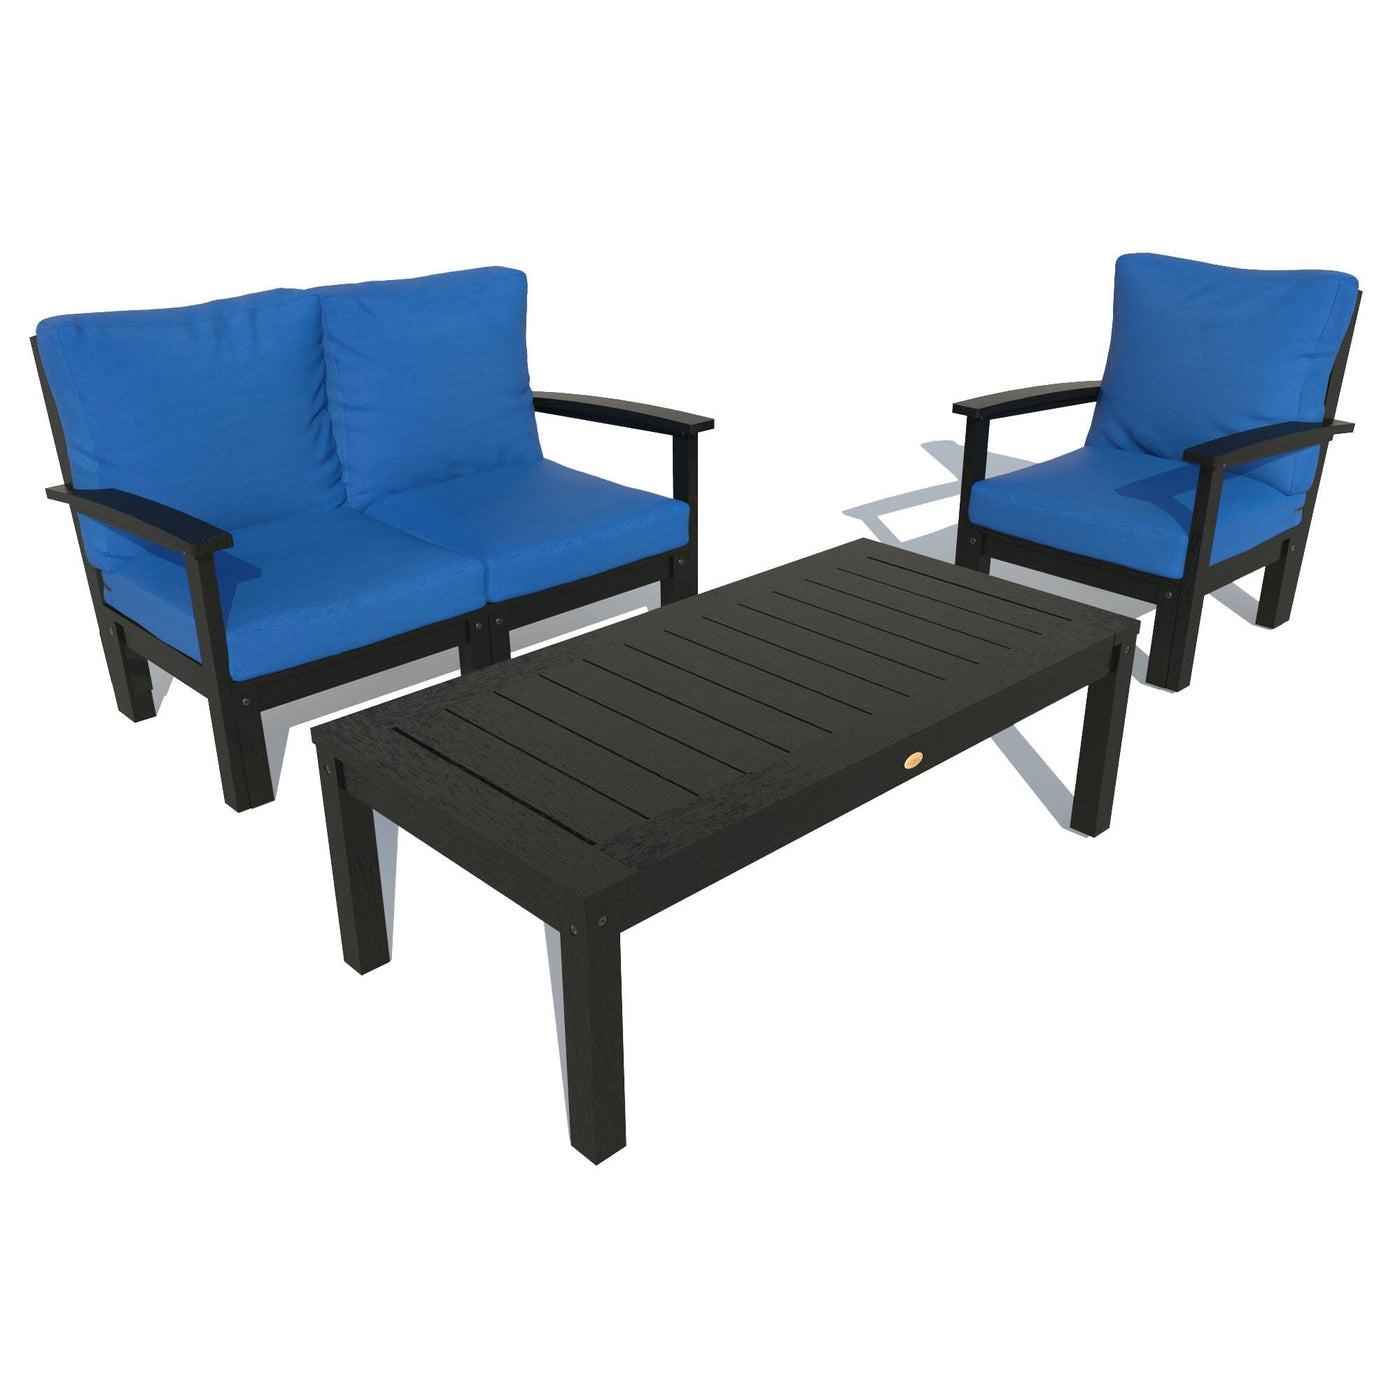 Bespoke Deep Seating: Loveseat, Chair and Conversation Table Deep Seating Highwood USA Cobalt Blue Black 